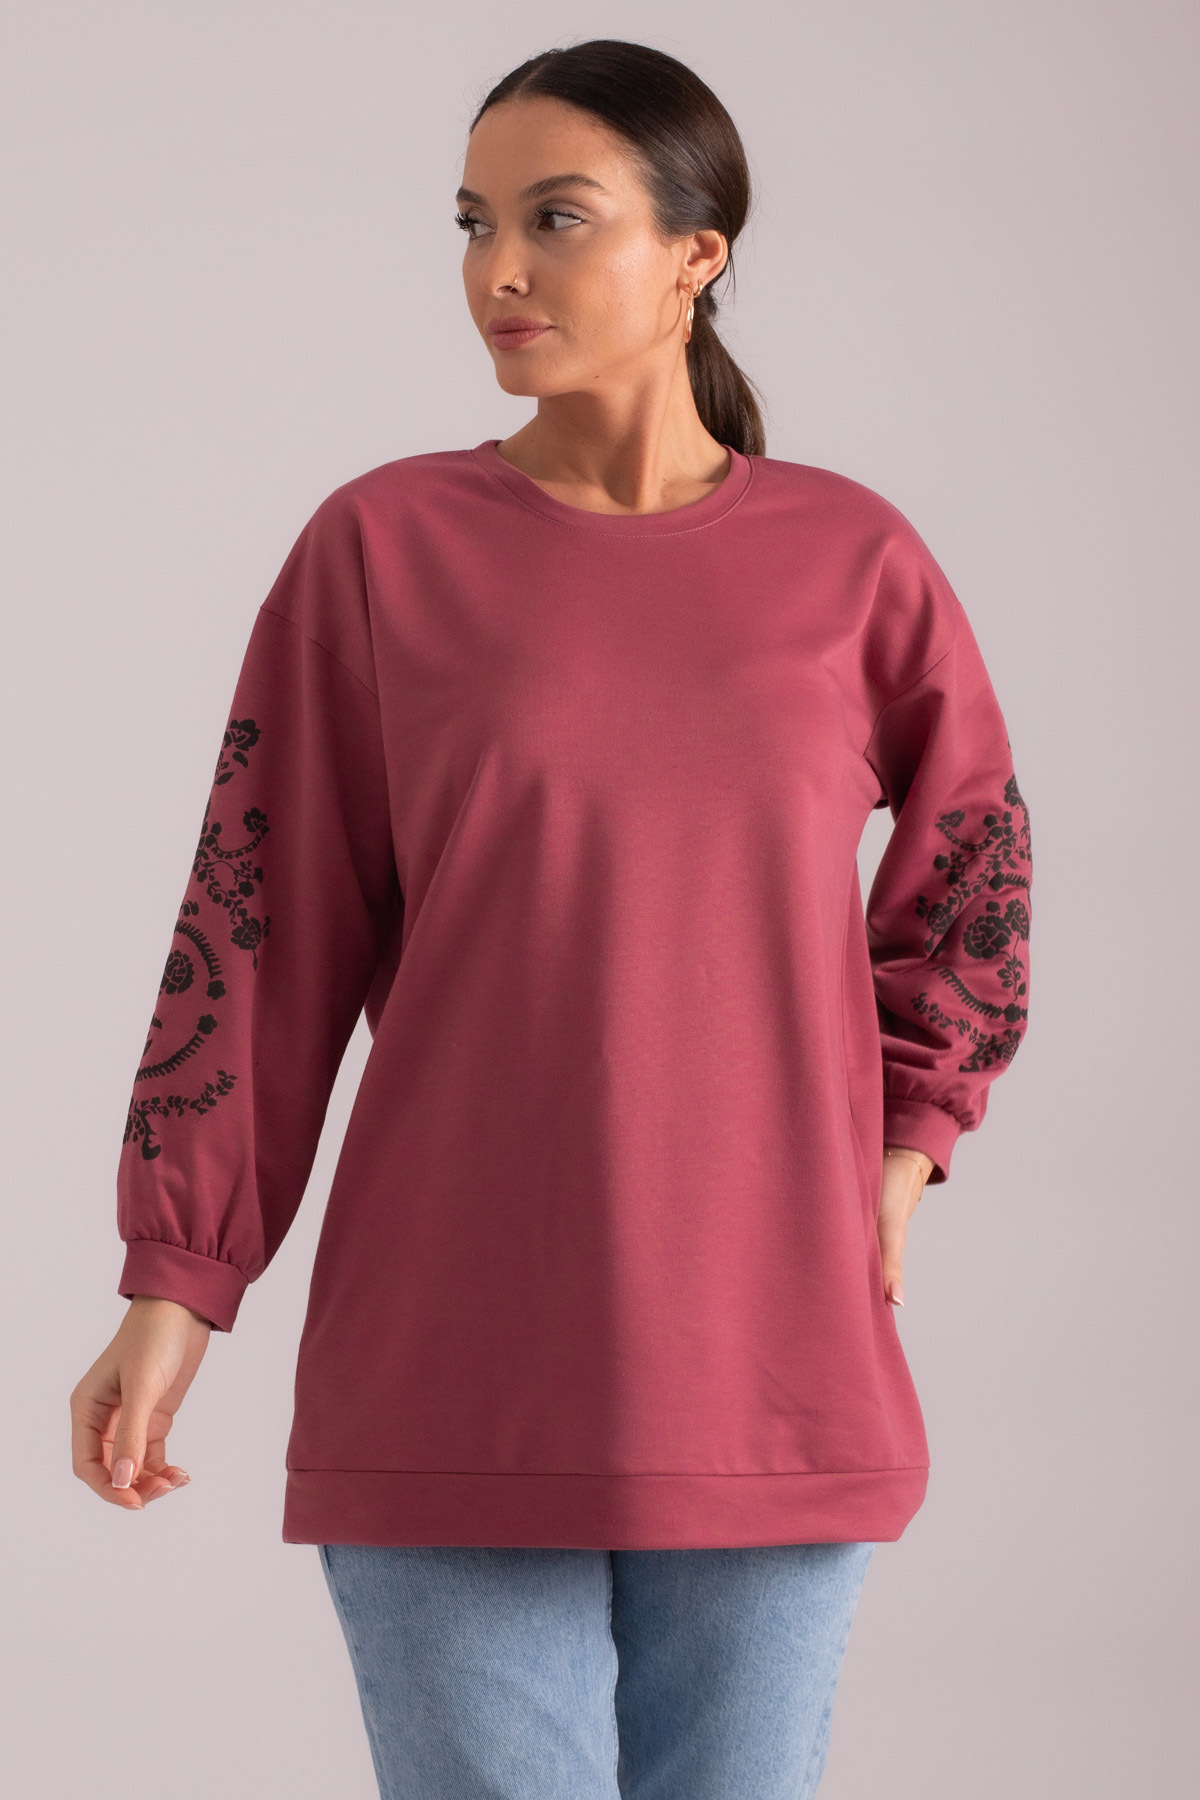 armonika Women's Dusty Rose Round Neck Sleeve Embossed Sweatshirts